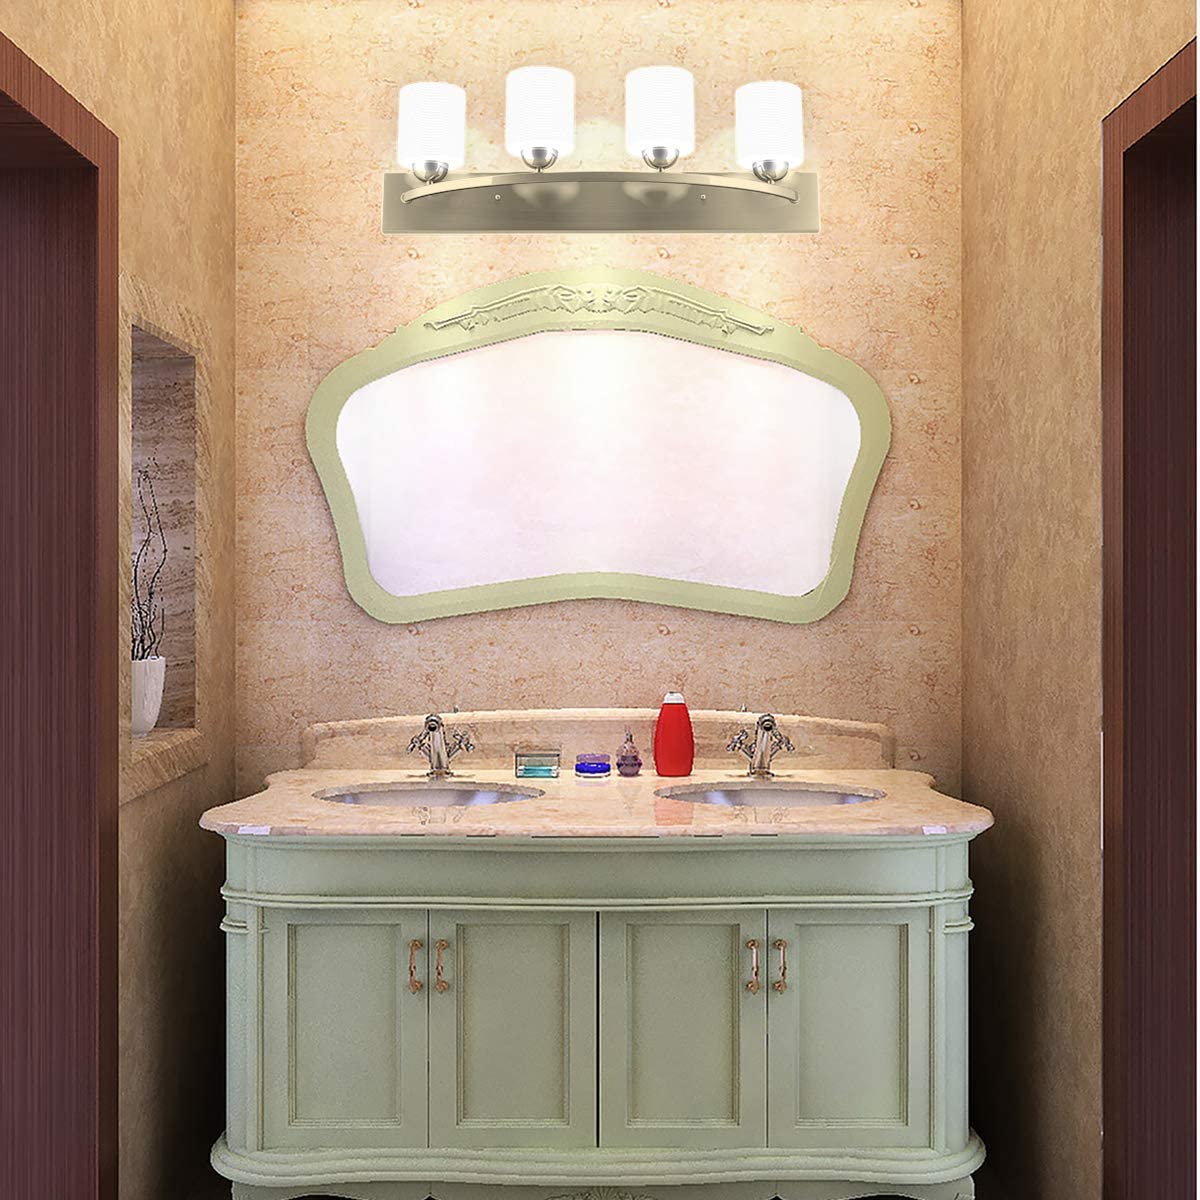 Add a modern touch to your bathroom. 💡
Shop here👉: amzn.to/3ck2KRT
Price: $72.99

#Goplus #VanityLamp #Lamp #Light #Lighting #PendantLamp #Walllight #ModernDesign #Bathroom #WallMounted #WhiteGlass #Decor #Decoration #Gift #Shopping #Onlineshopping #Family #Deals